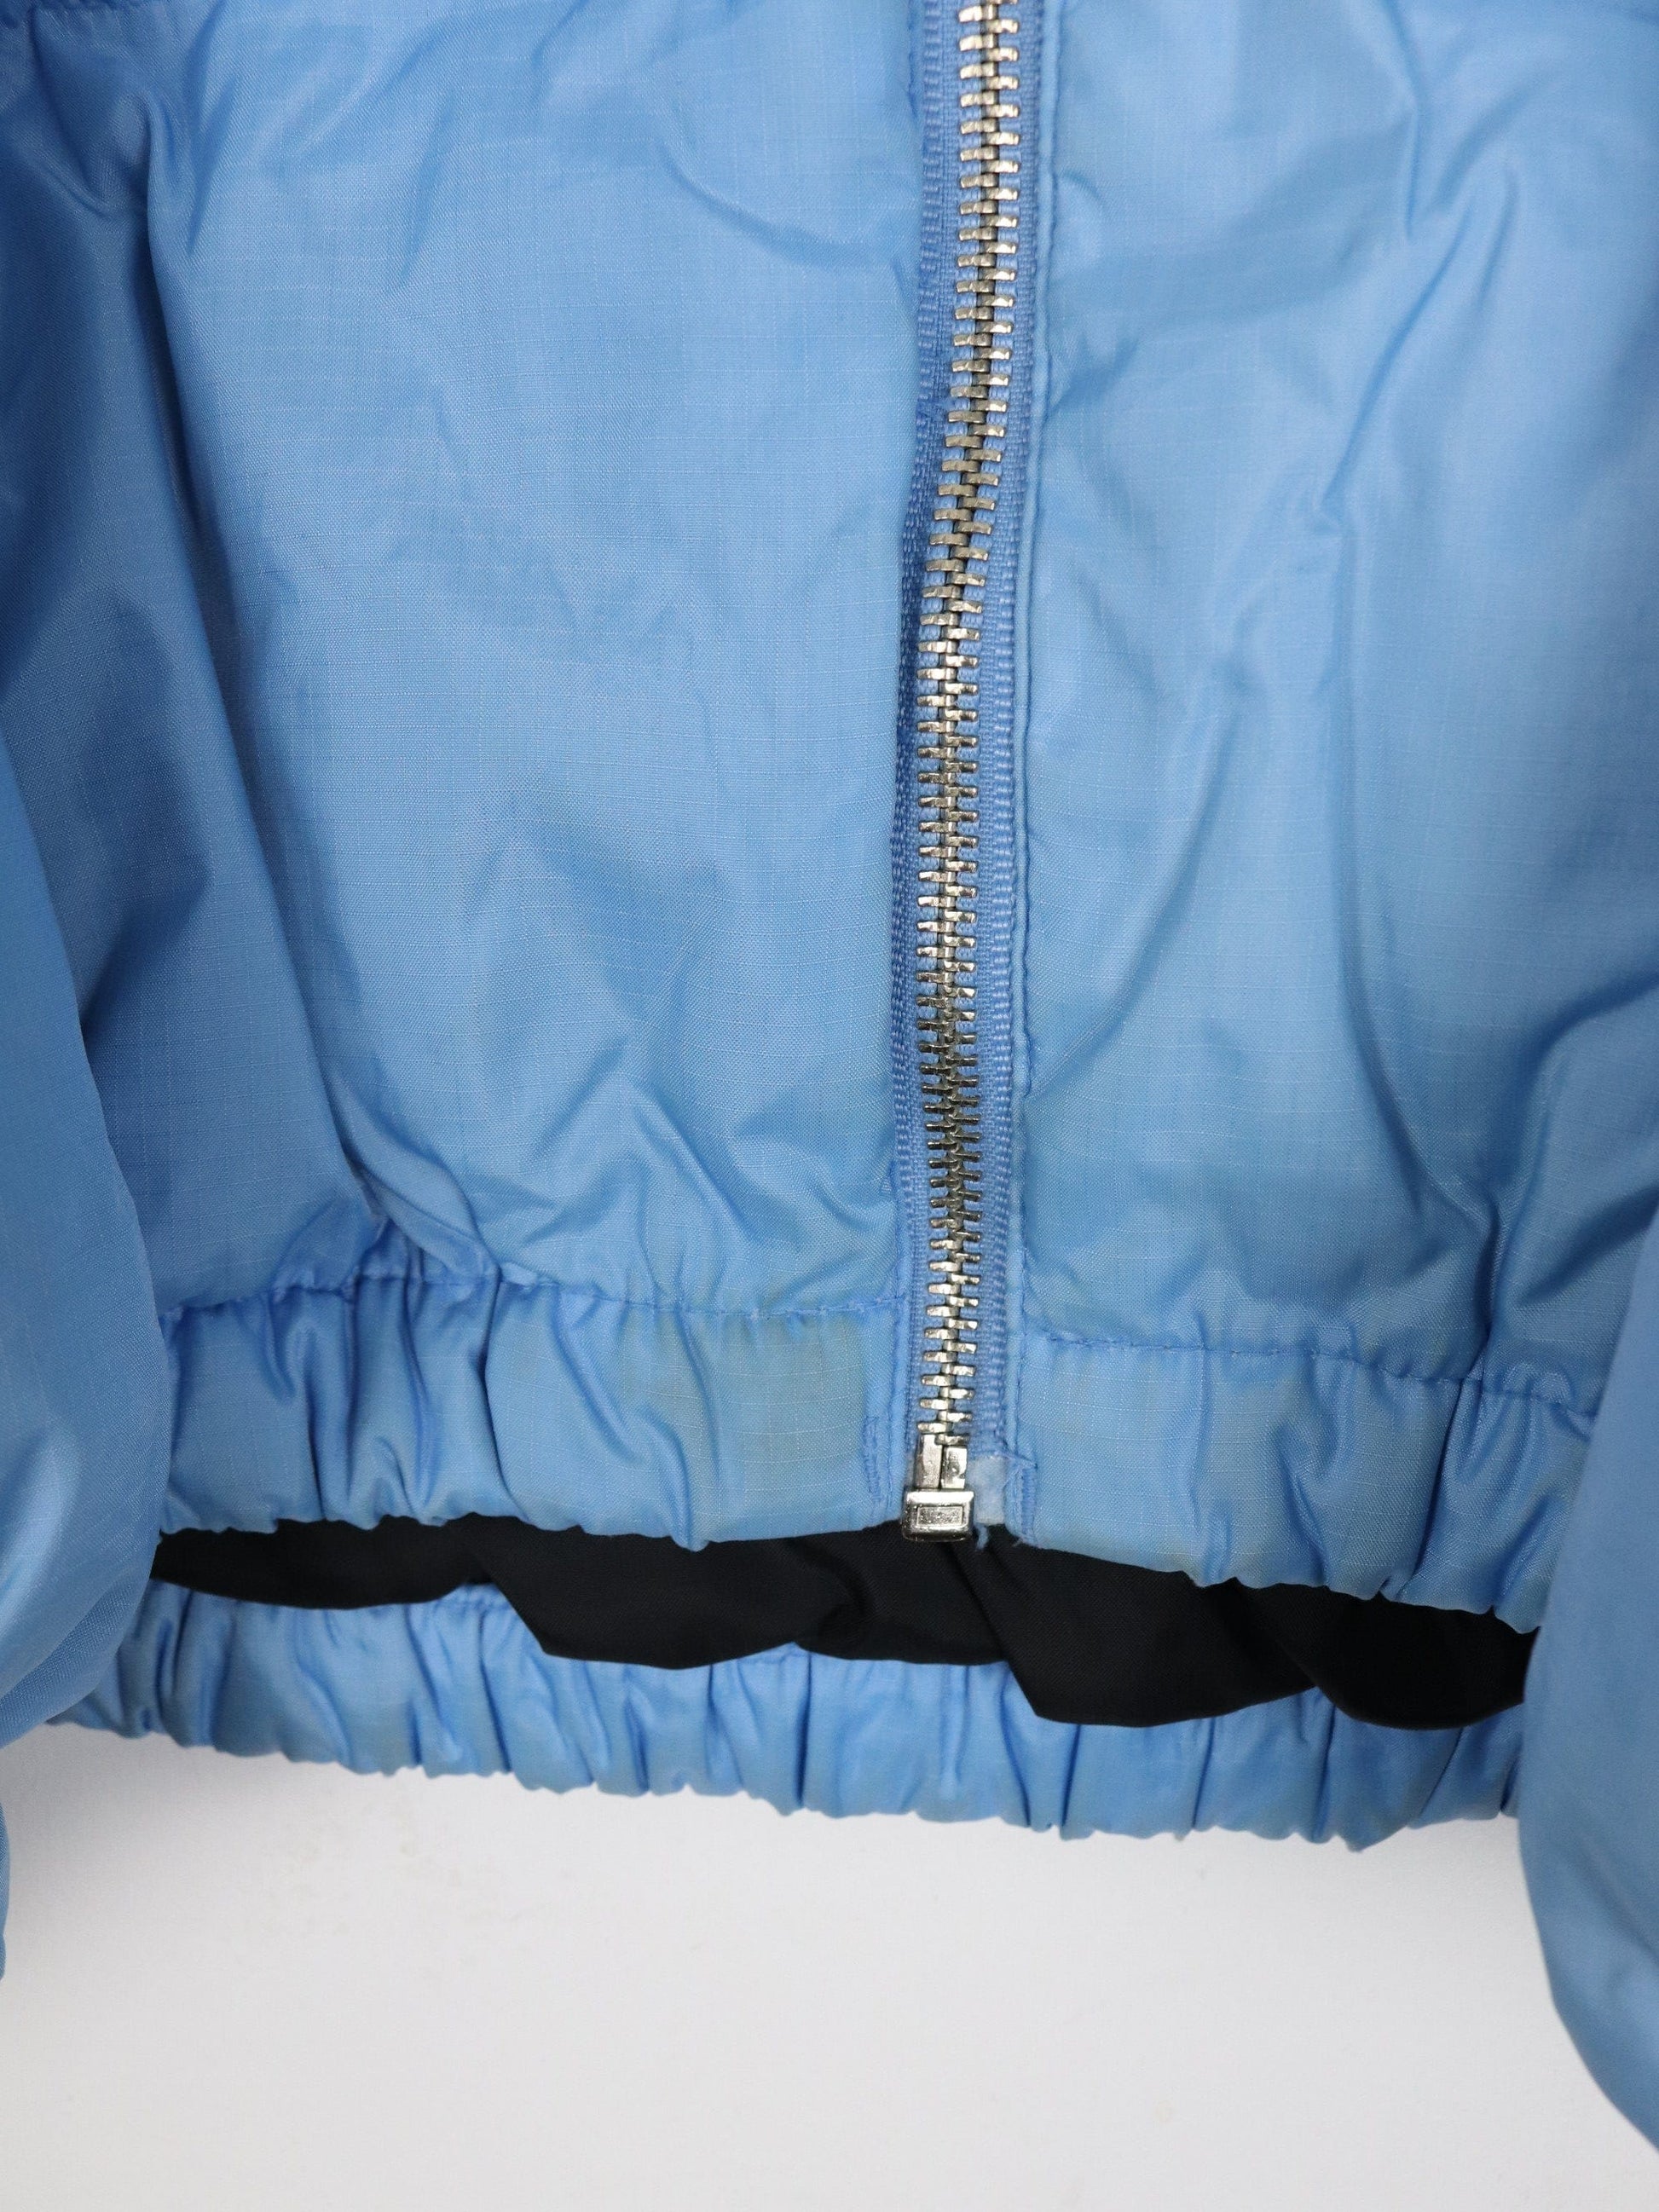 Polo Ralph Lauren - Authenticated Jacket - Synthetic Blue Plain for Men, Never Worn